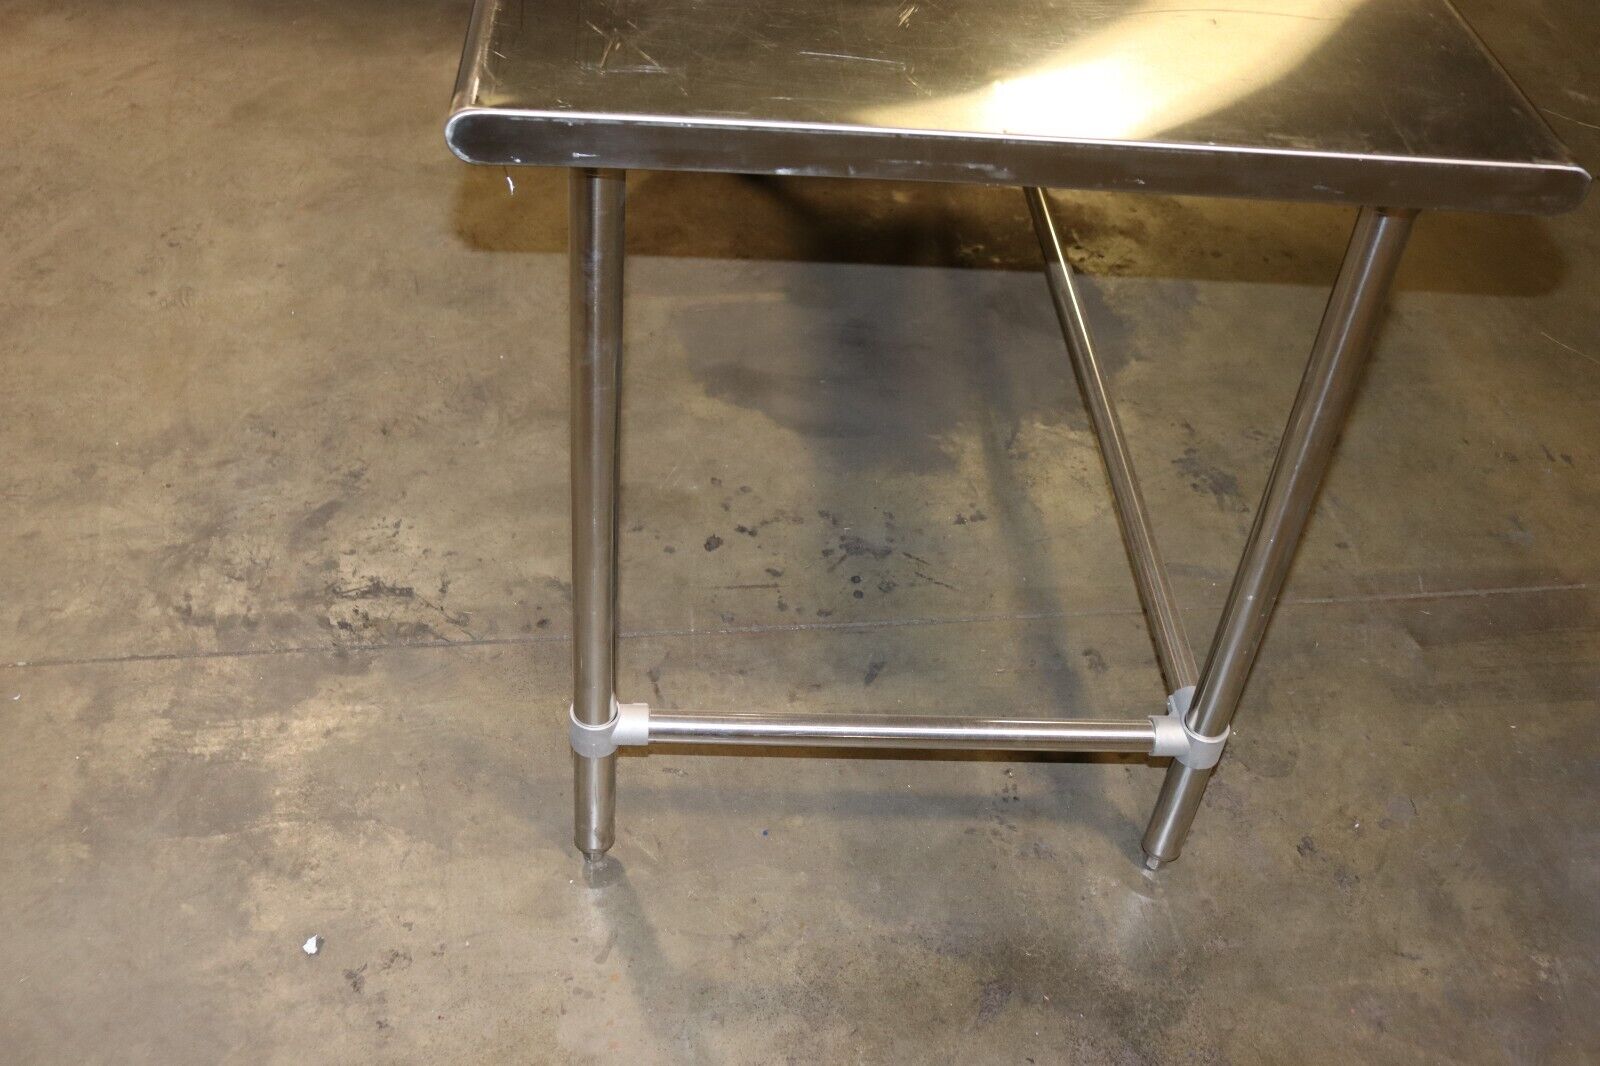 Uline stainless steel work table